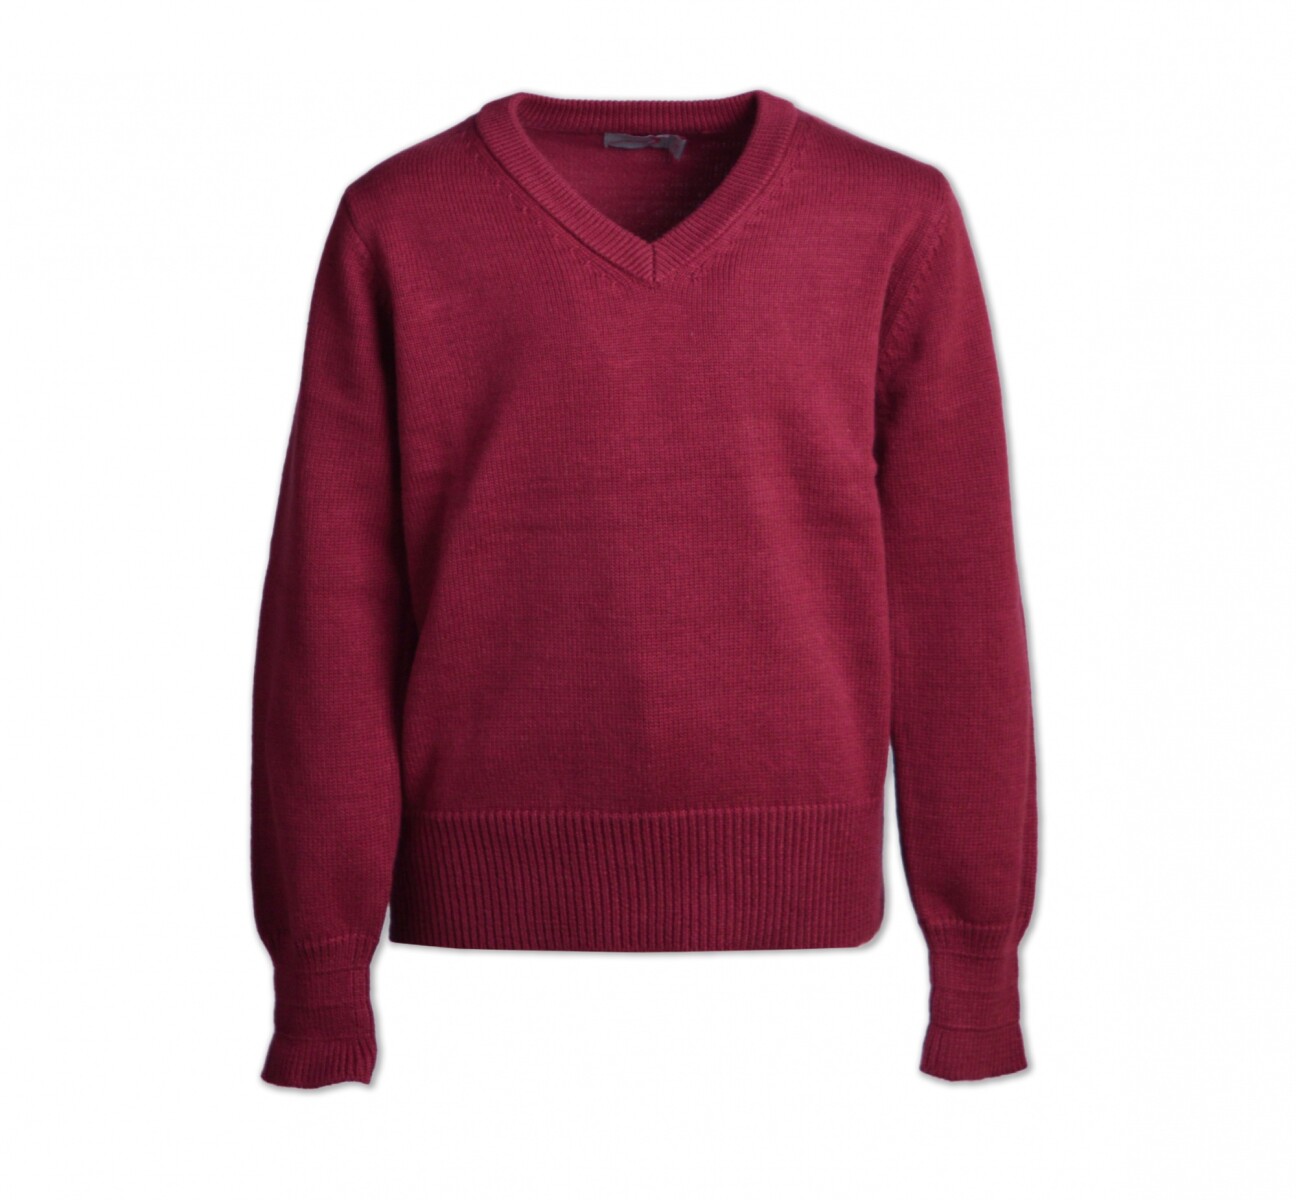 Sweater escote V - Bordeaux 